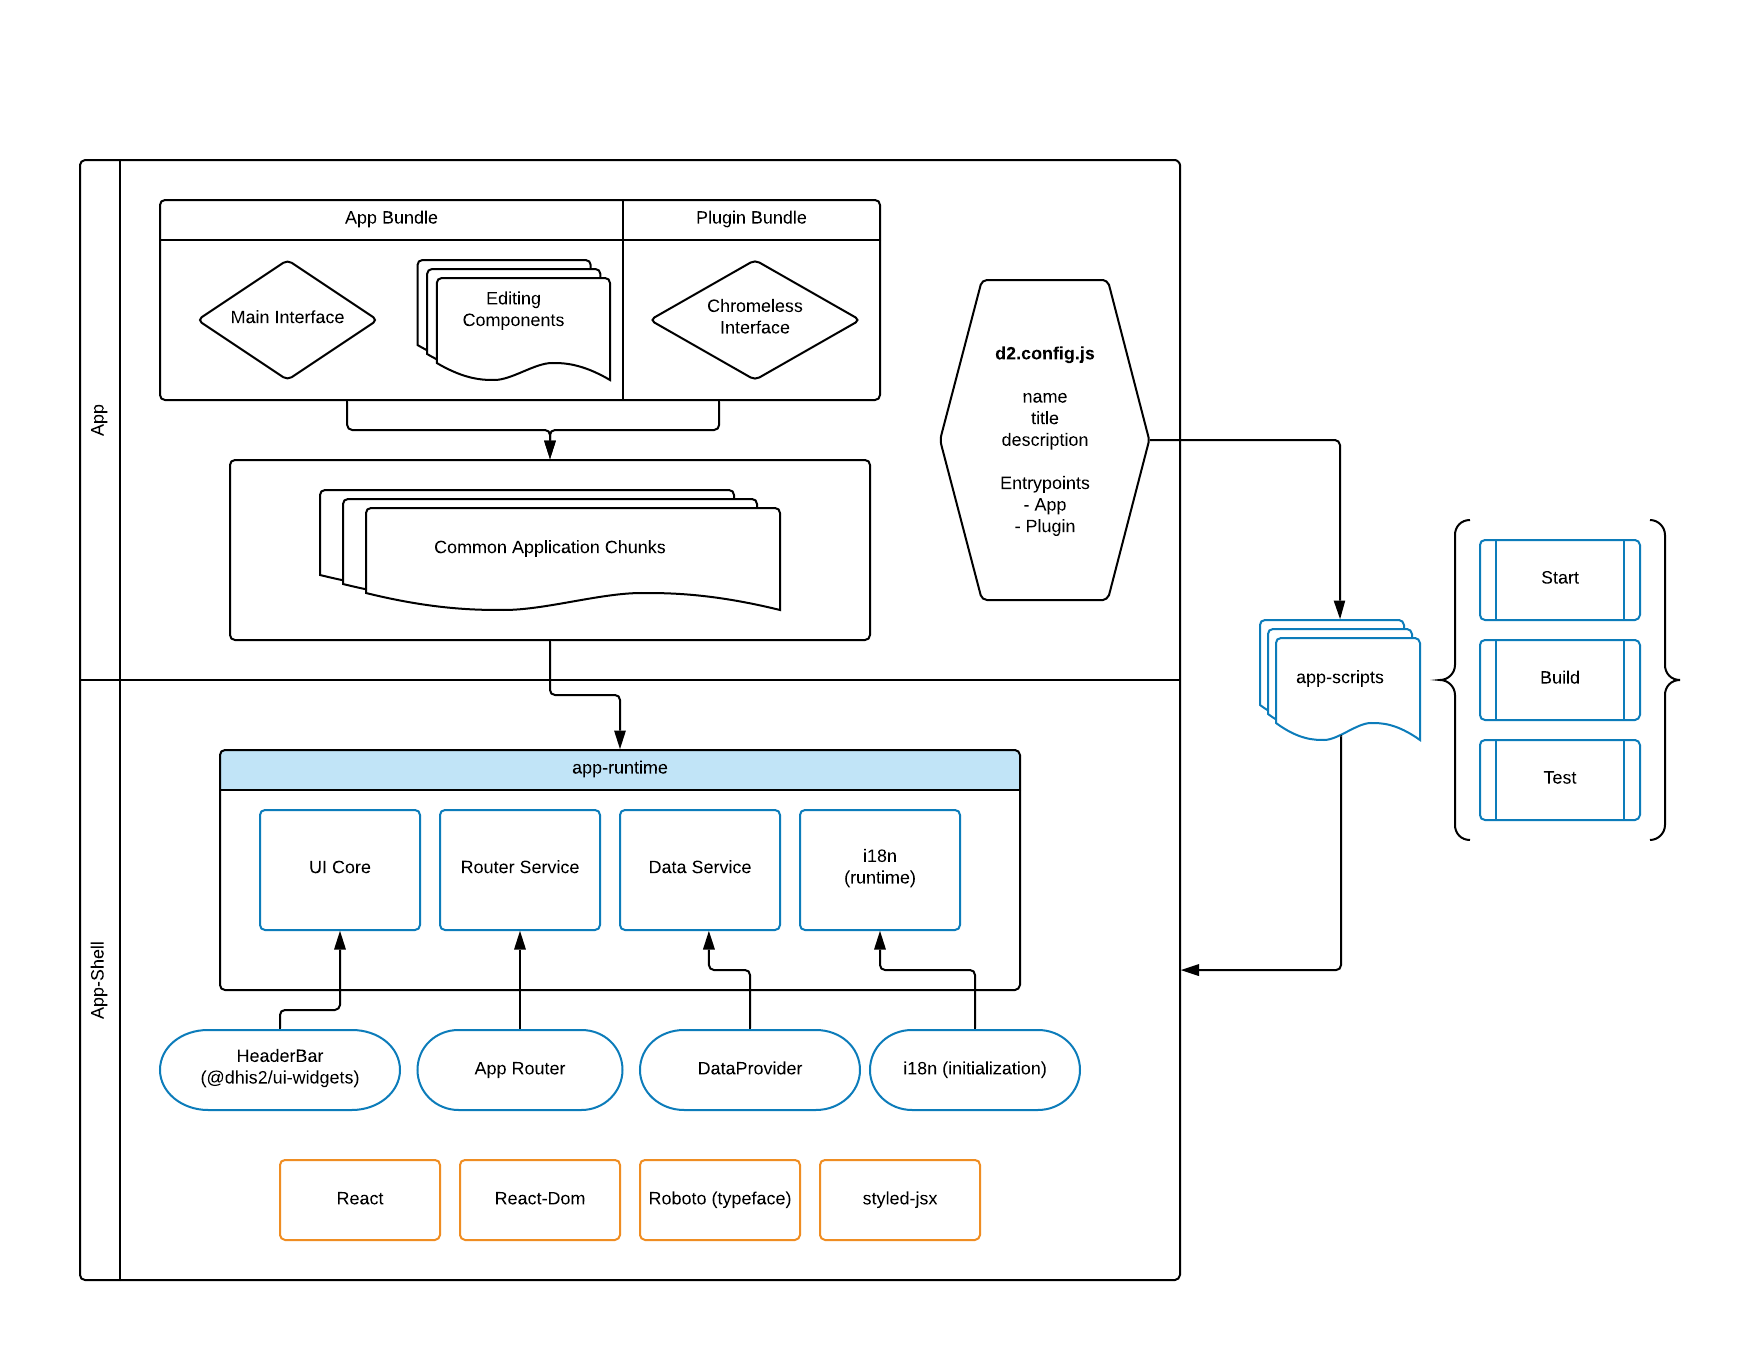 DHIS2 application architecture diagram